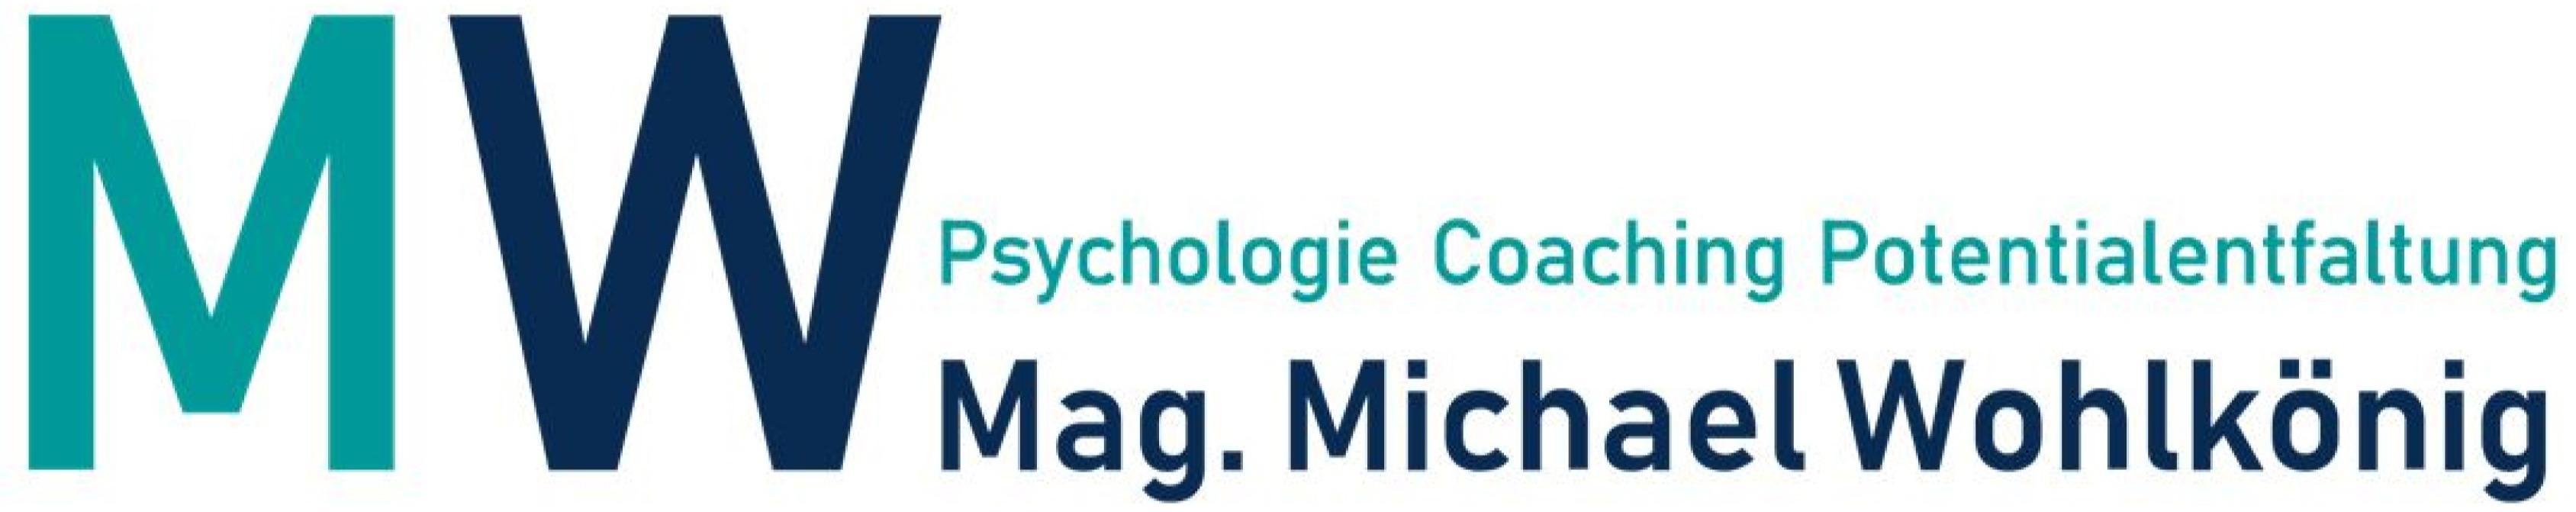 Logo Mag. Michael Wohlkönig - Psychologie - Coaching - Potentialentfaltung